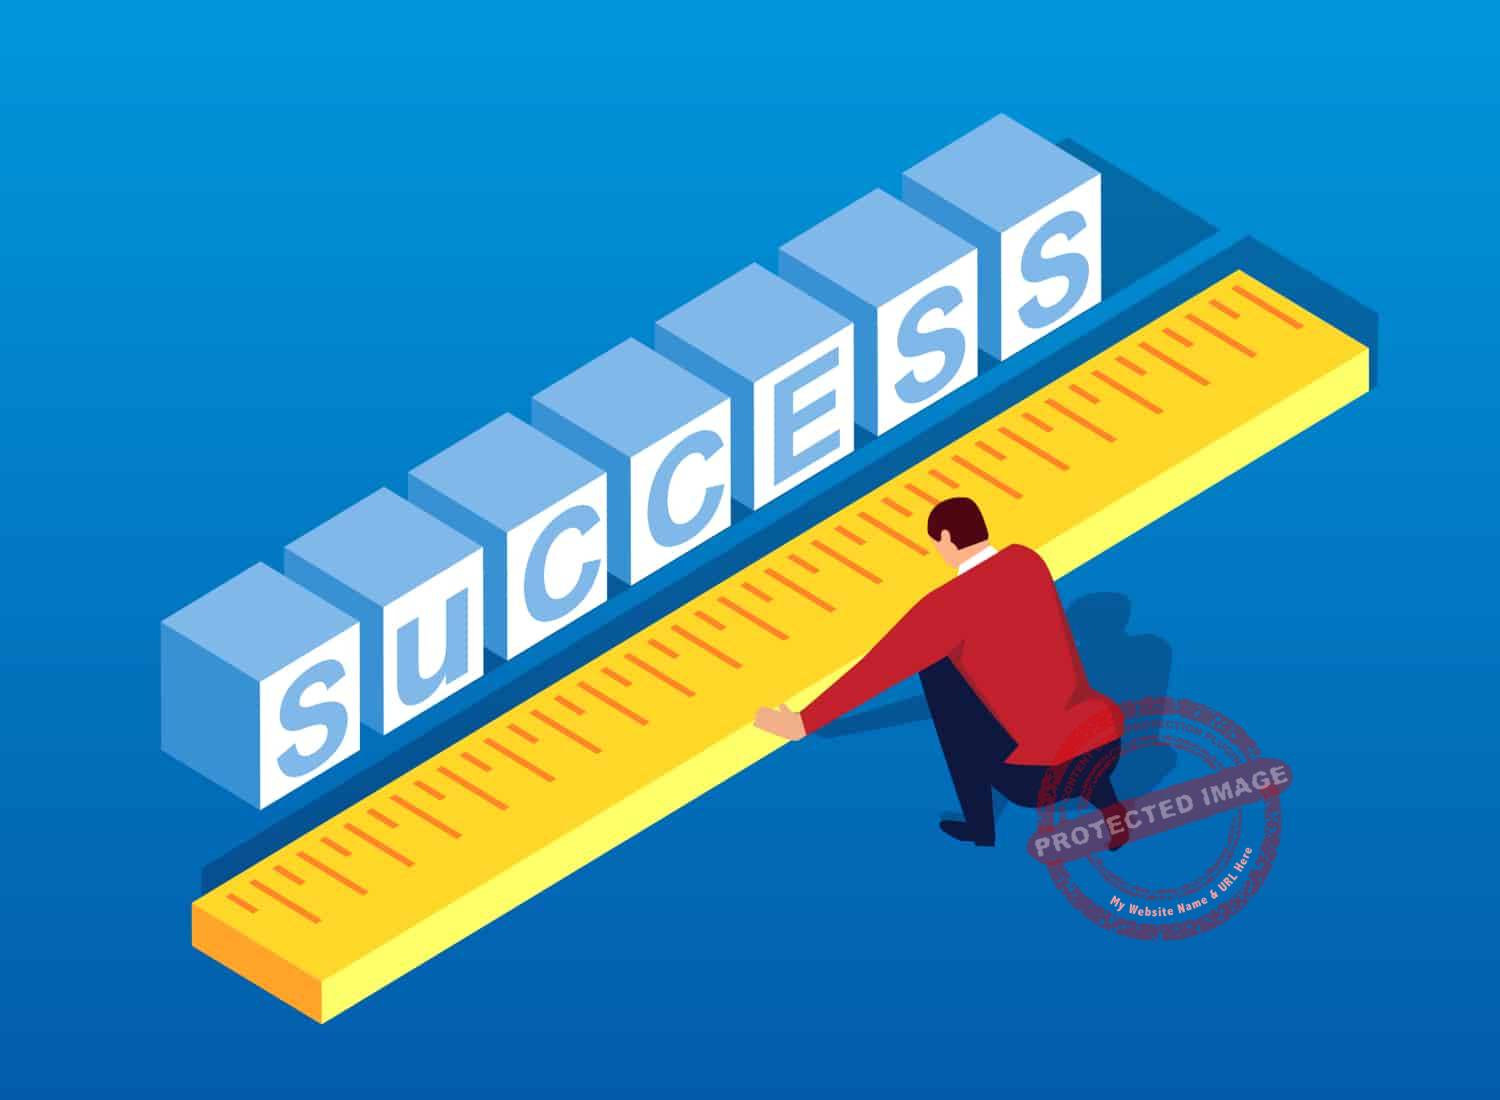 business plan measure success